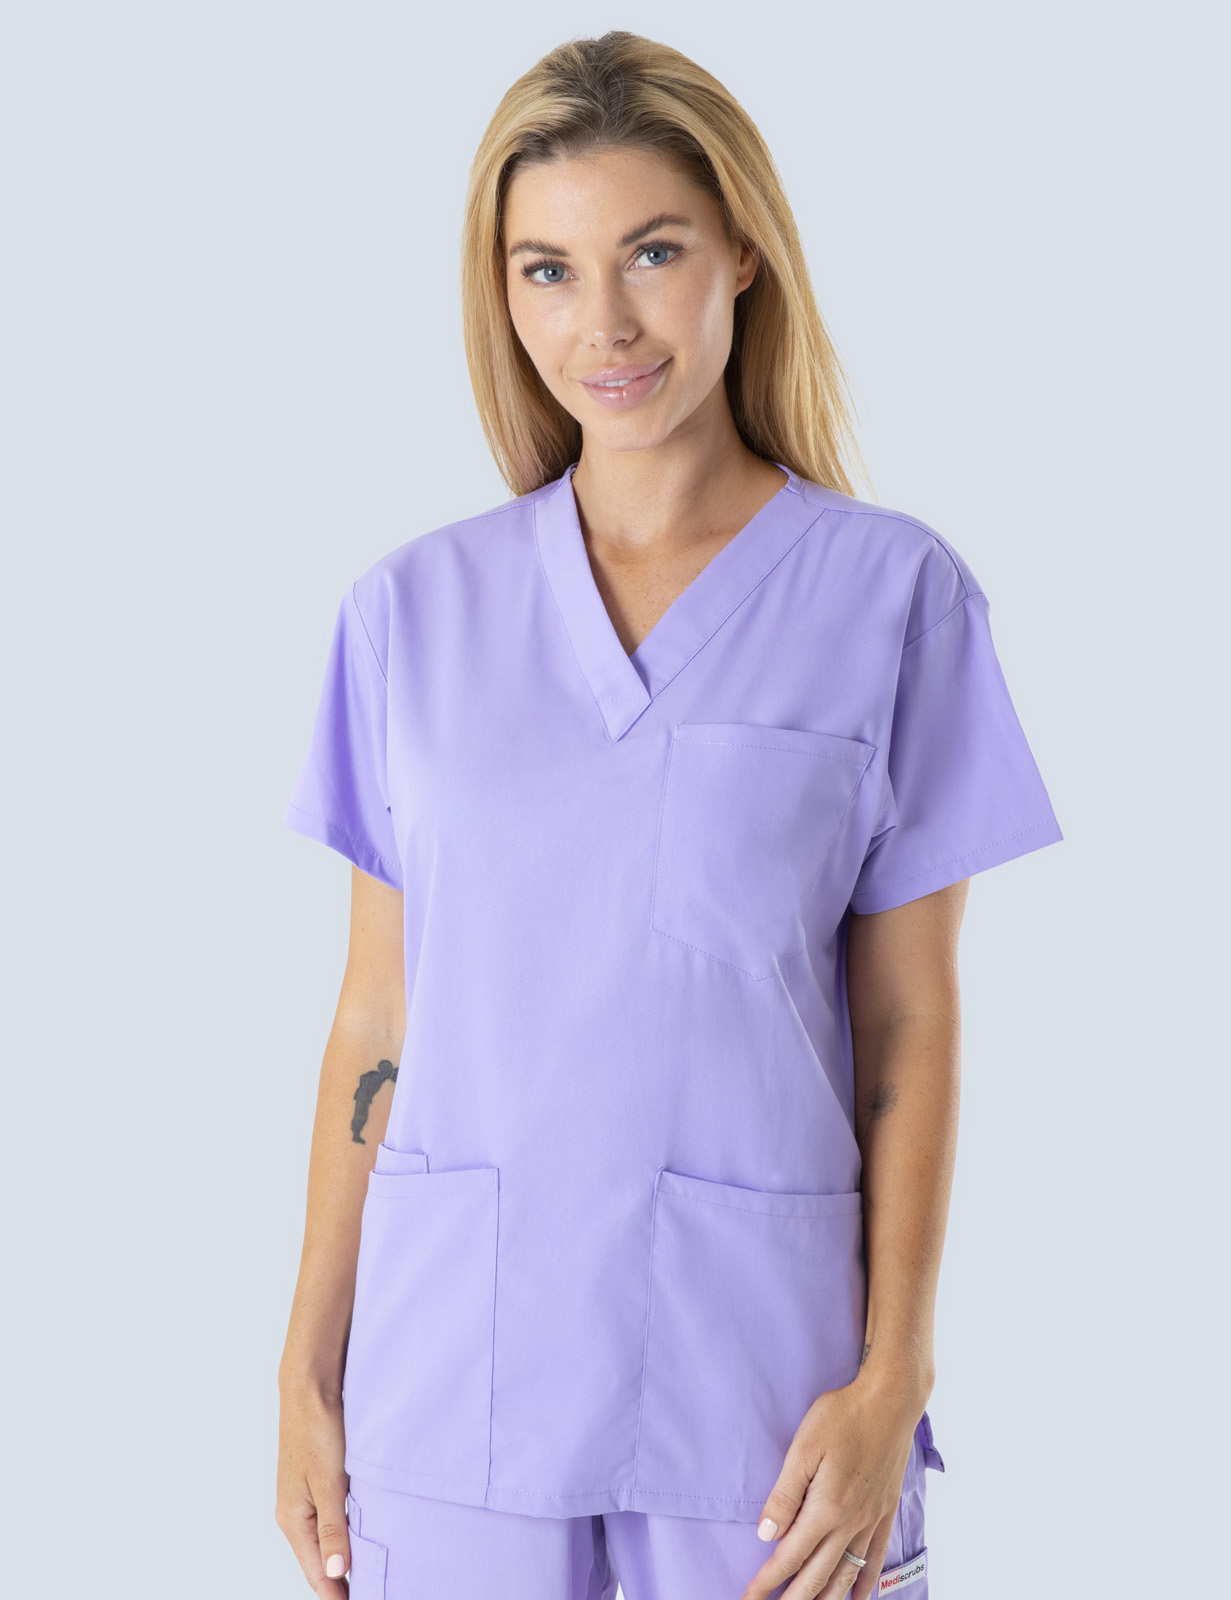 Pathology North Uniform Top Only Bundle (4 Pocket Scrub Top in Lilac incl Logo)